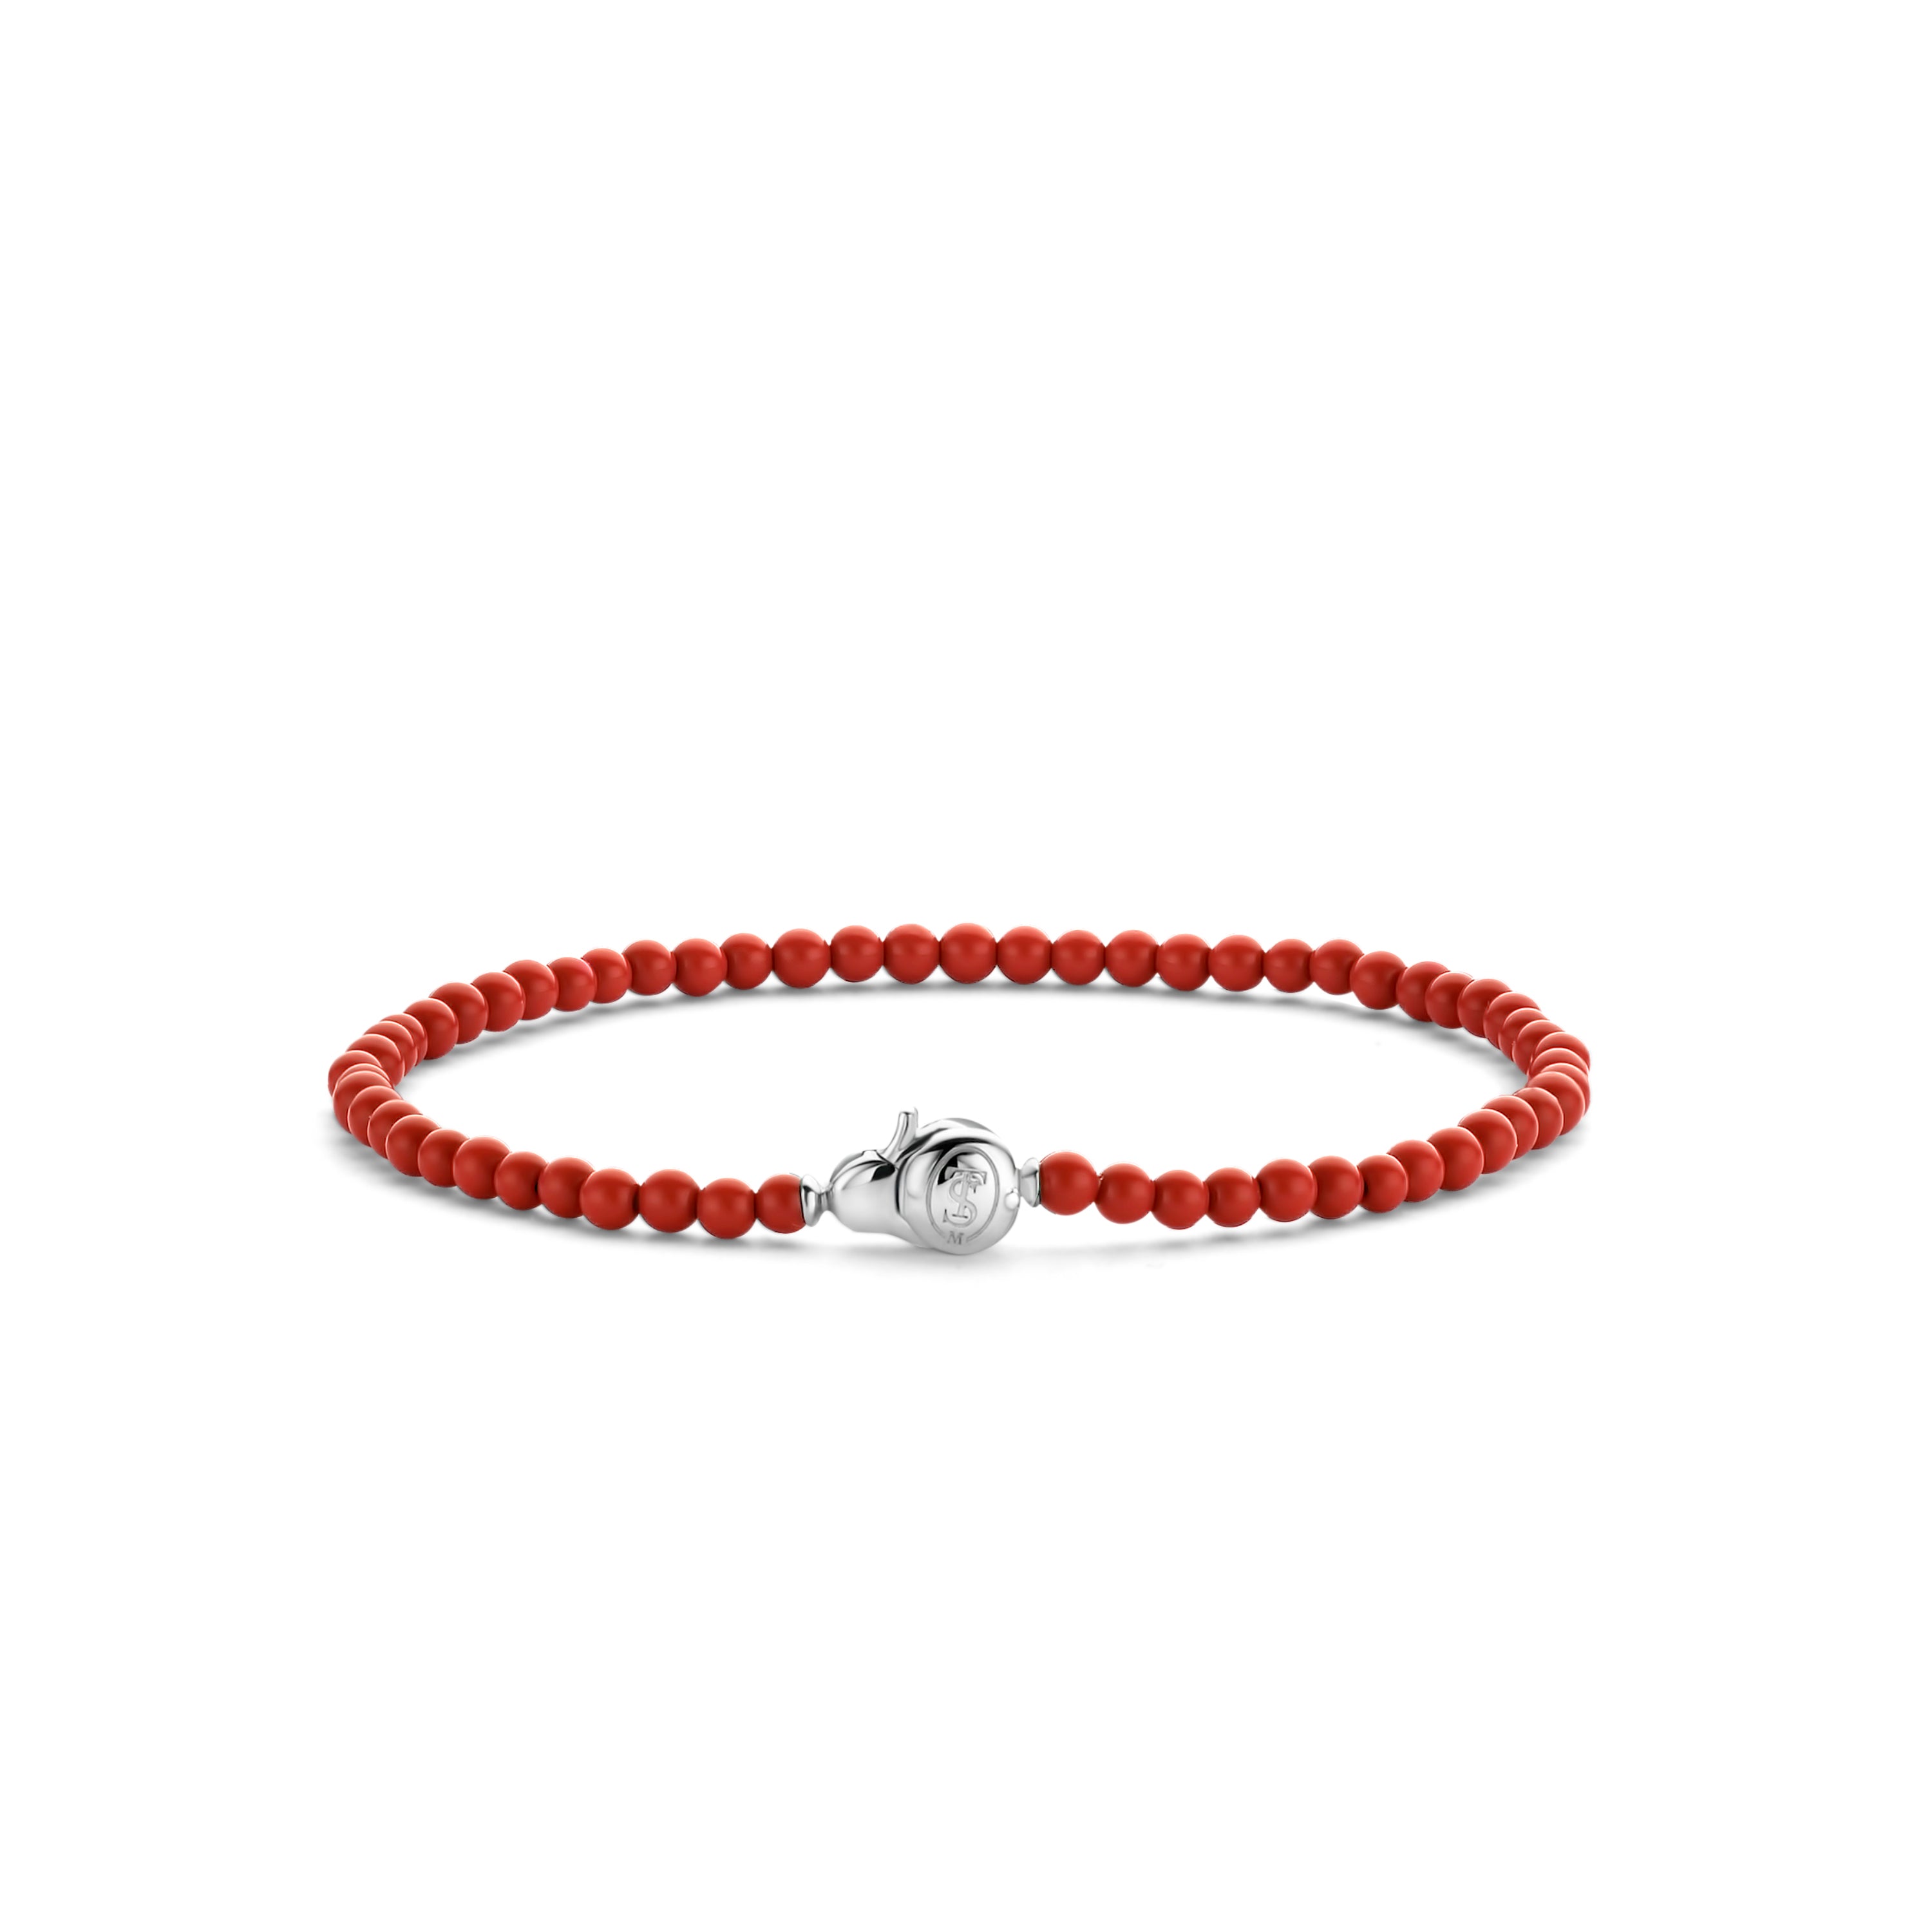 Red Coral Bead Bracelet